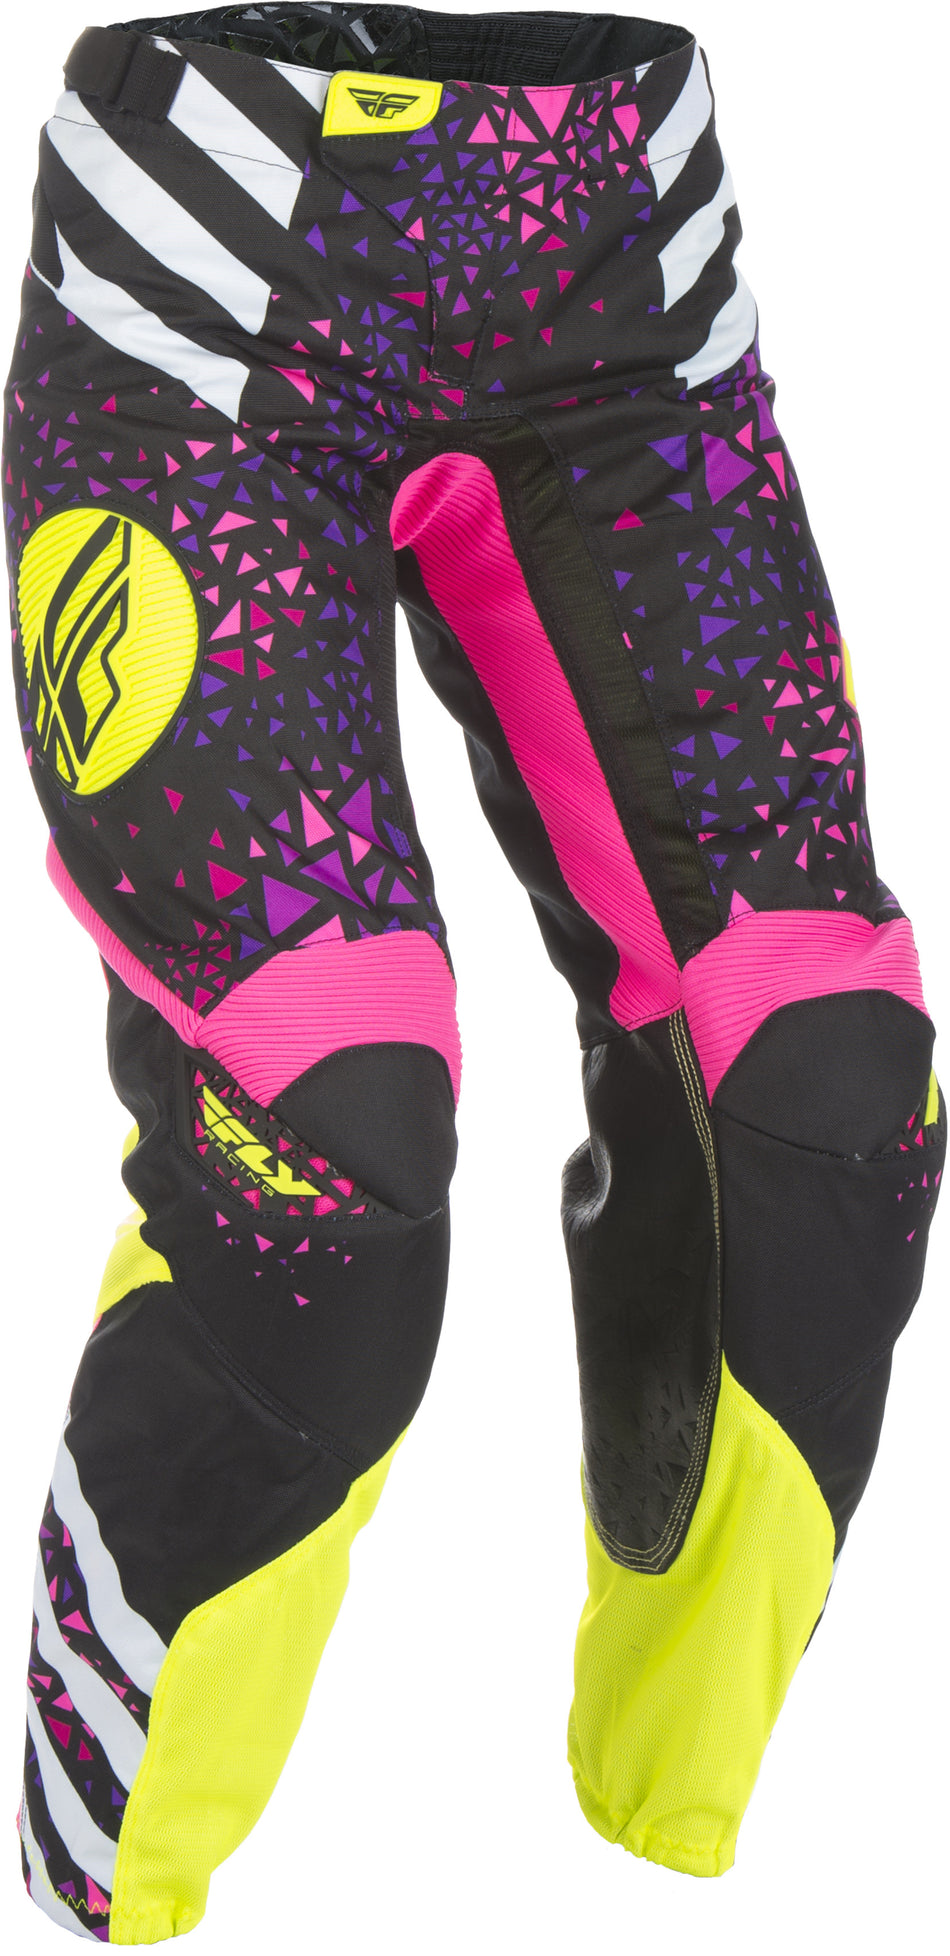 FLY RACING Kinetic Women's Race Pants Neon/Pink/Hi-Vis Sz 3/4 371-63905